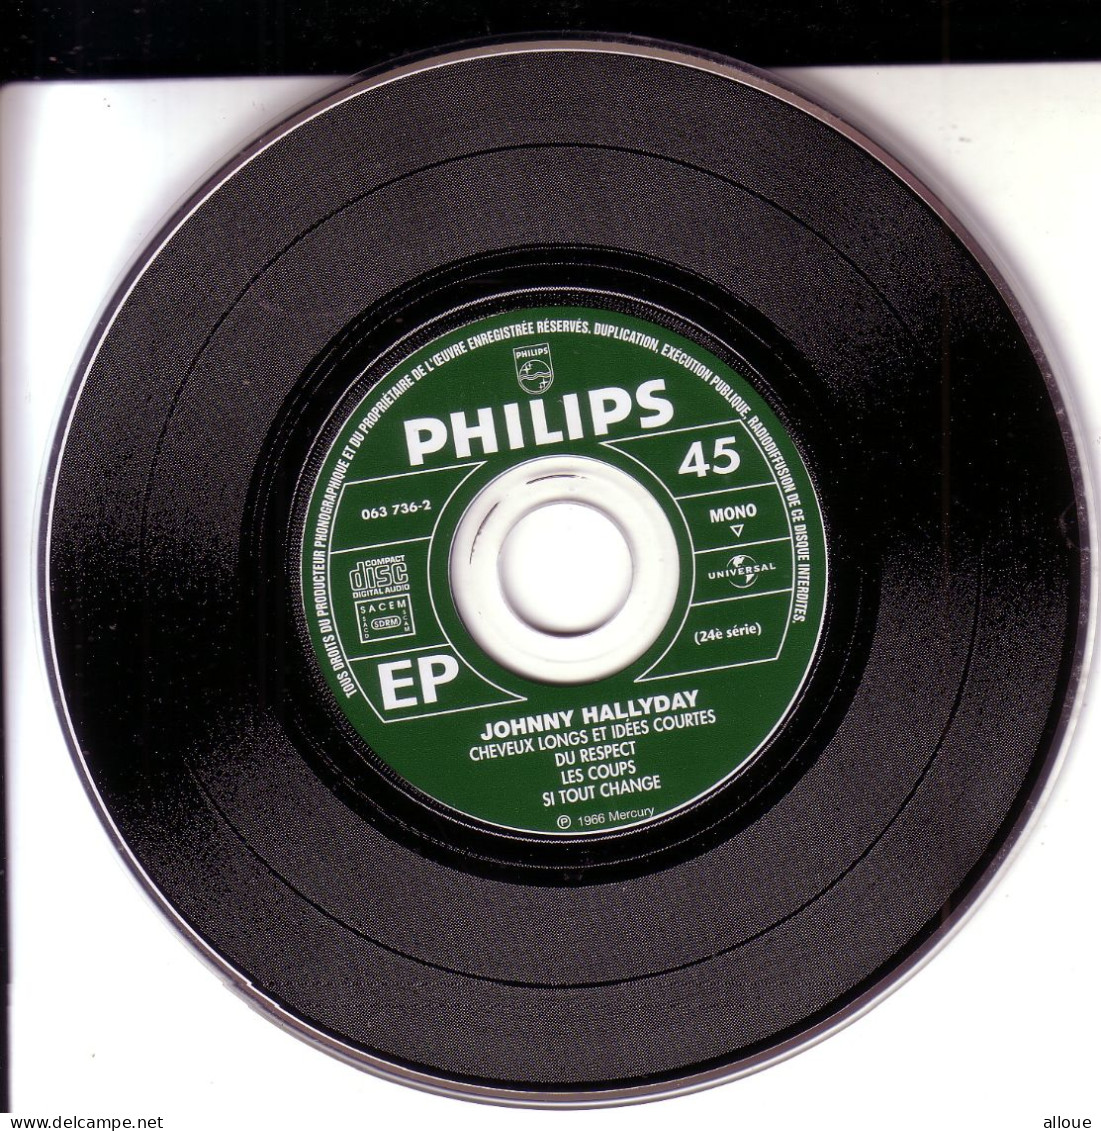 JOHNNY HALLYDAY CD EP CHEVEUX LONGS ET IDEES COURTES + 3 - Otros - Canción Francesa